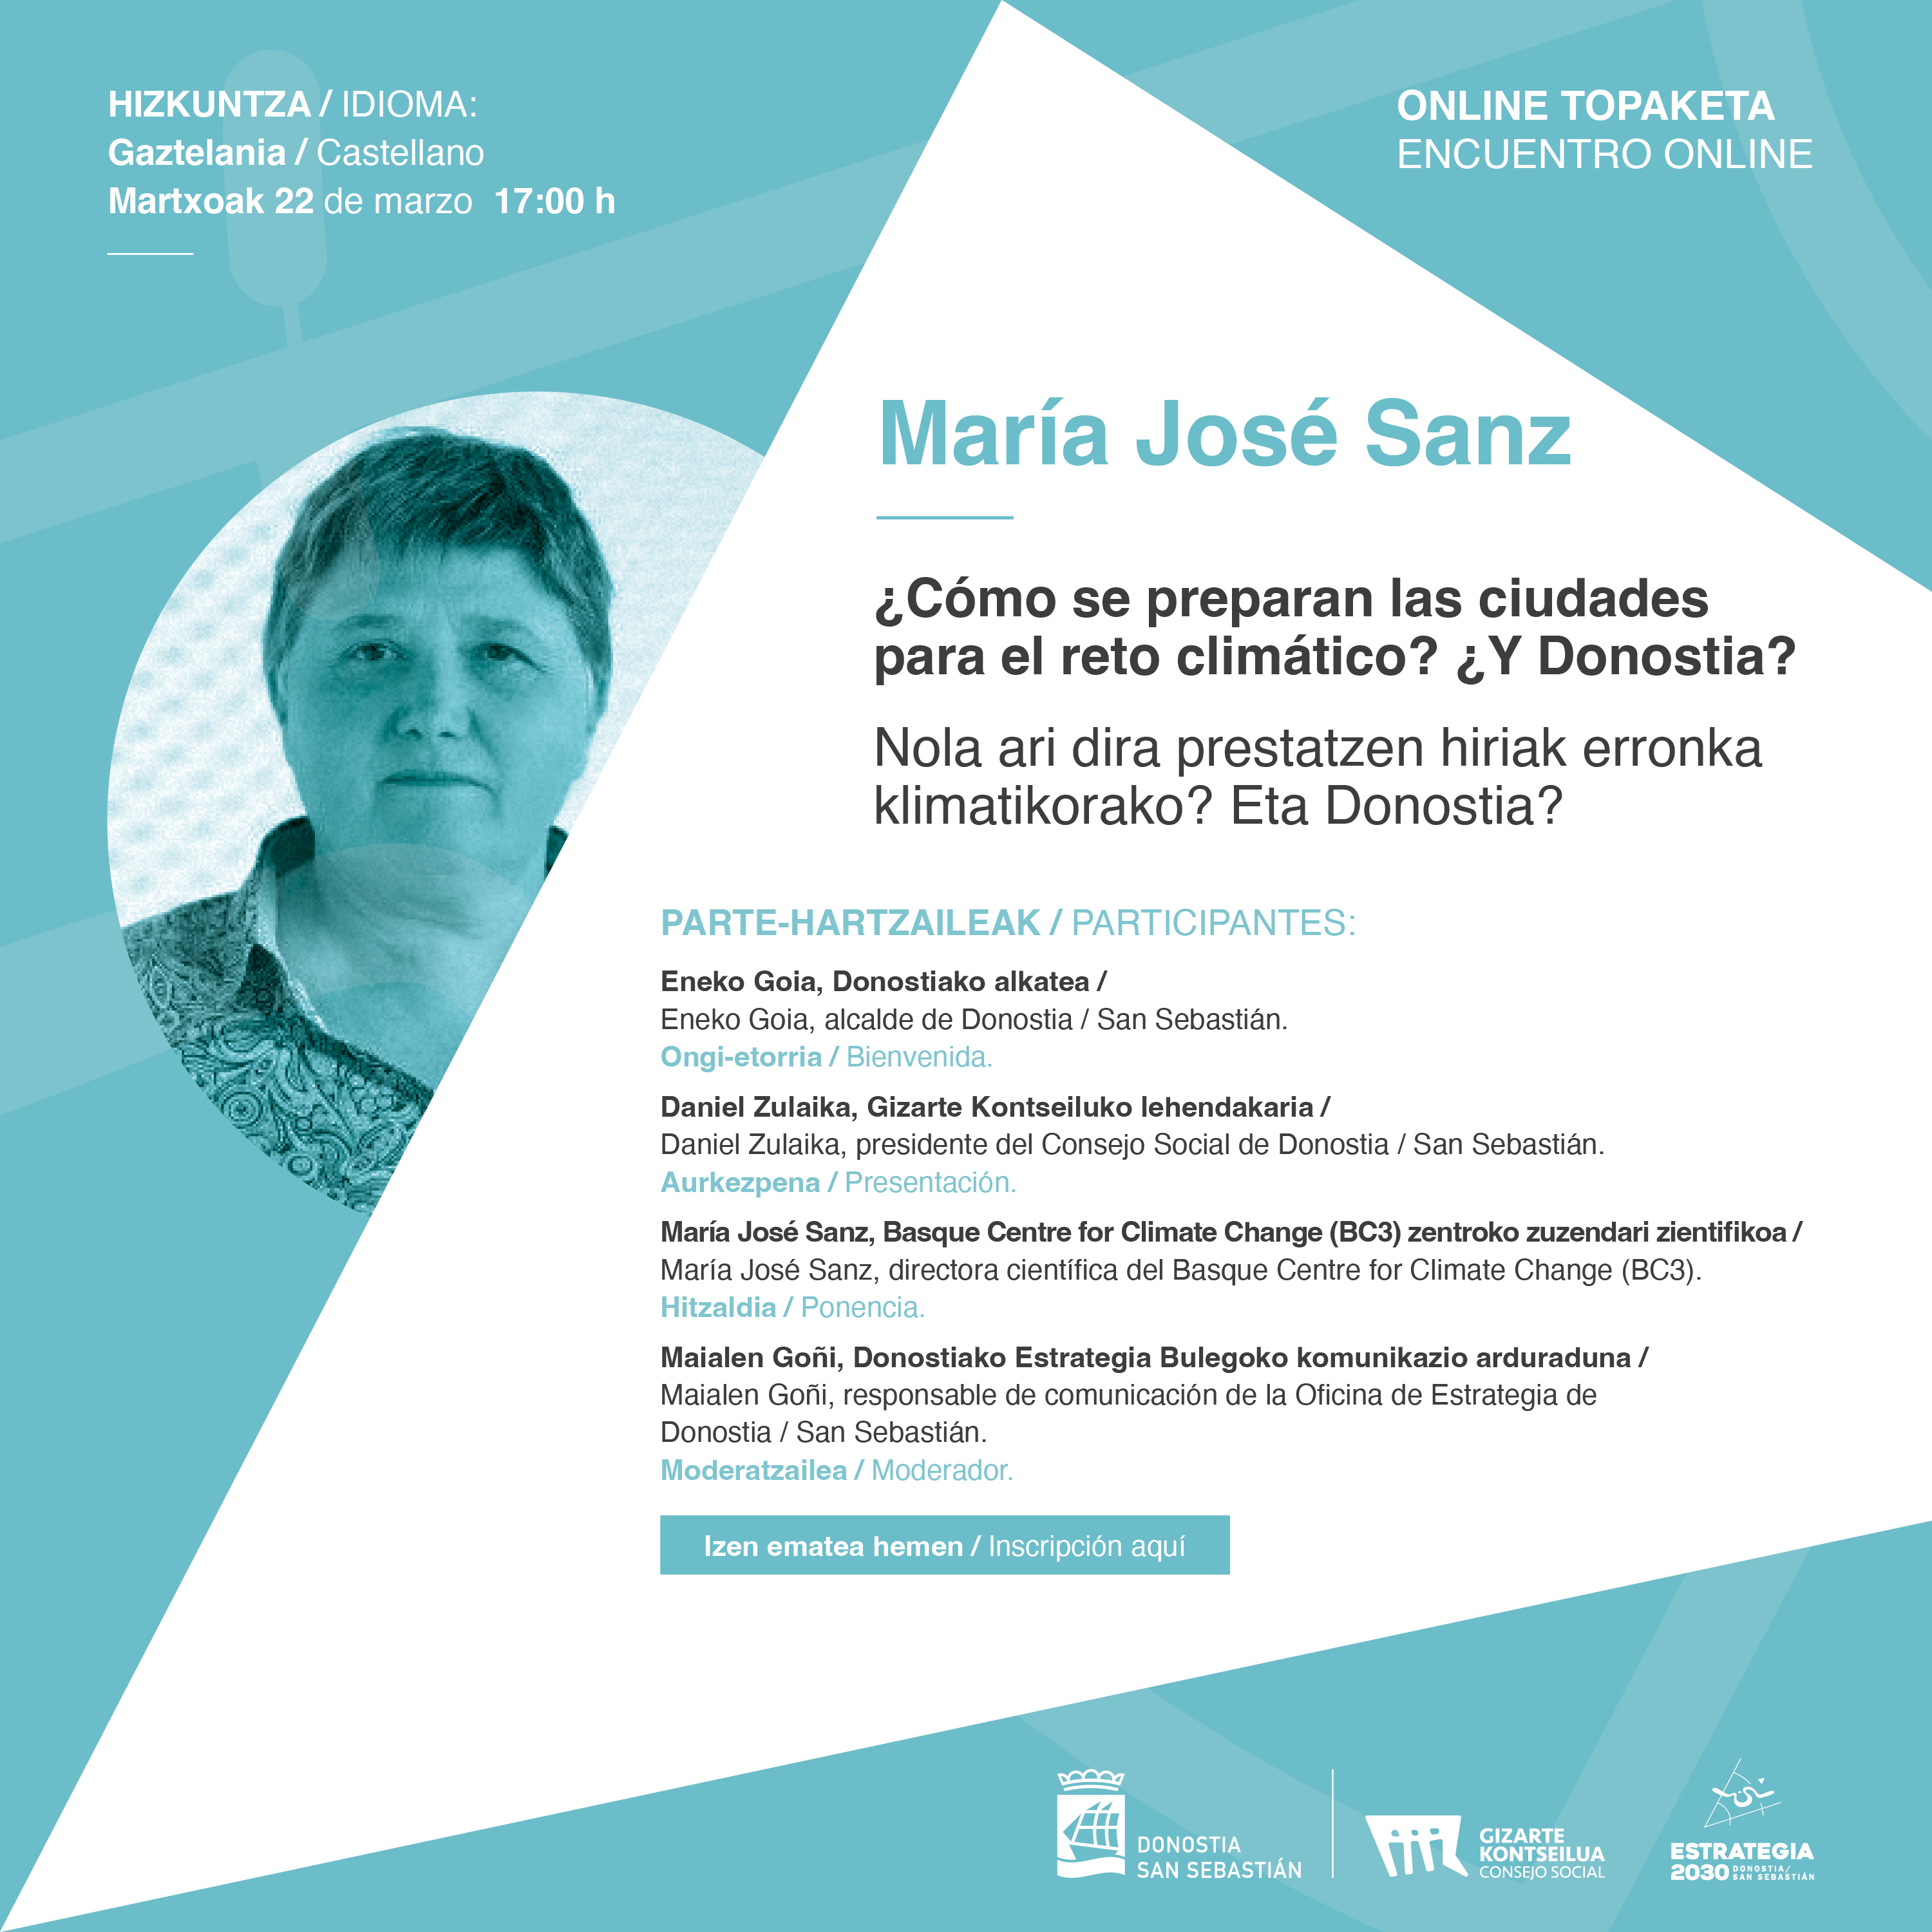 María José Sanz: Erronka Klimatikoa